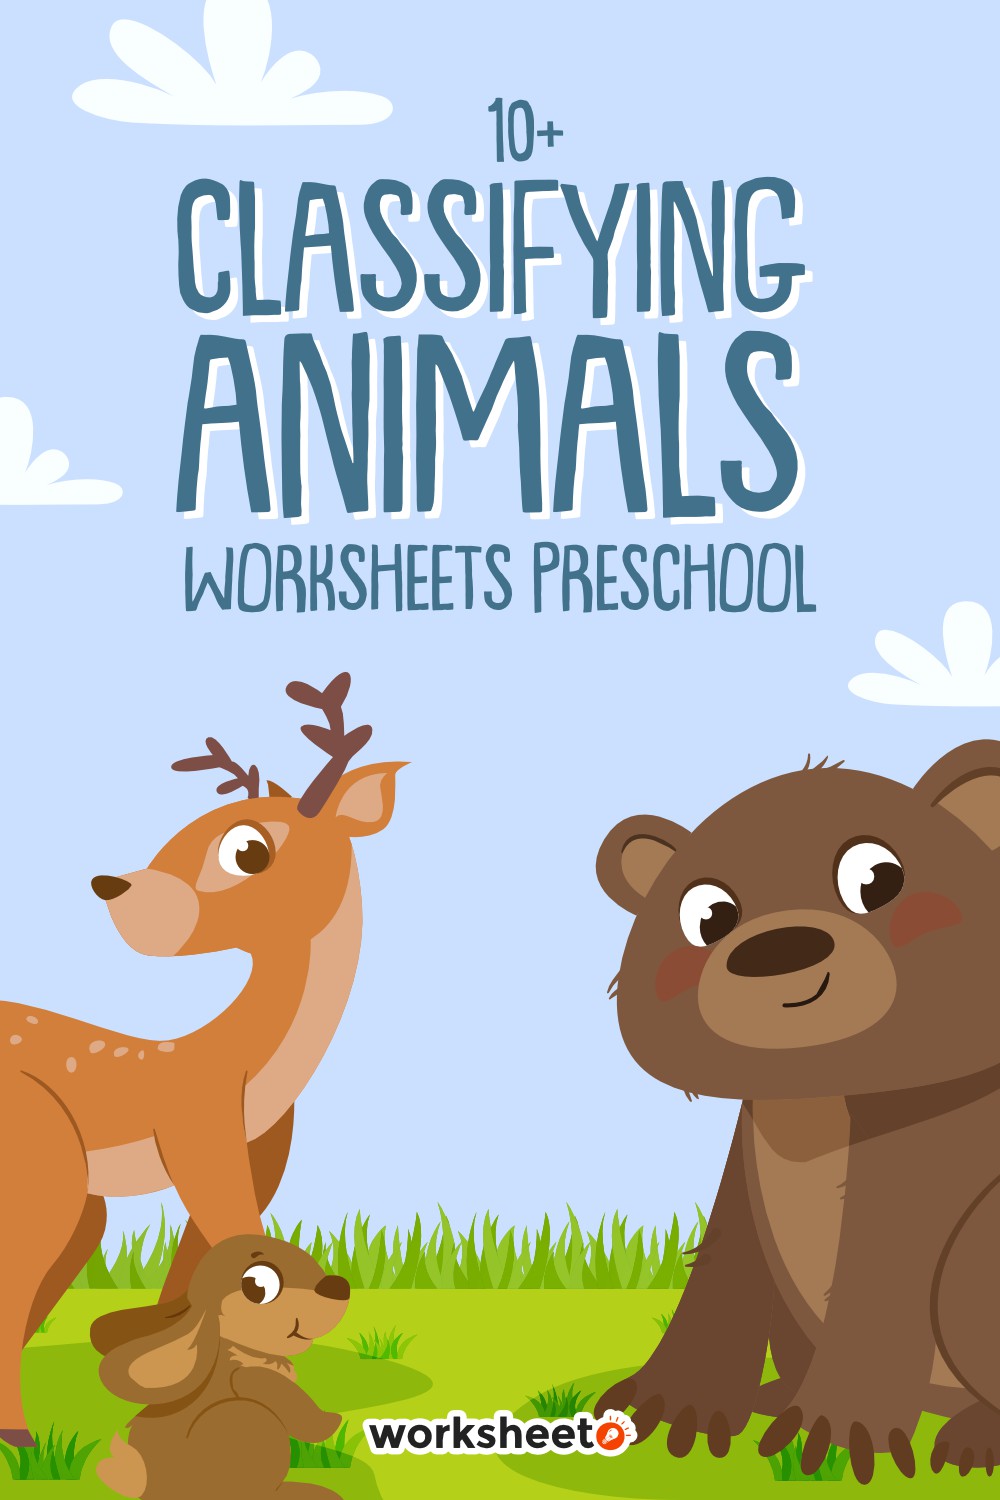 15 Images of Classifying Animals Worksheets Preschool